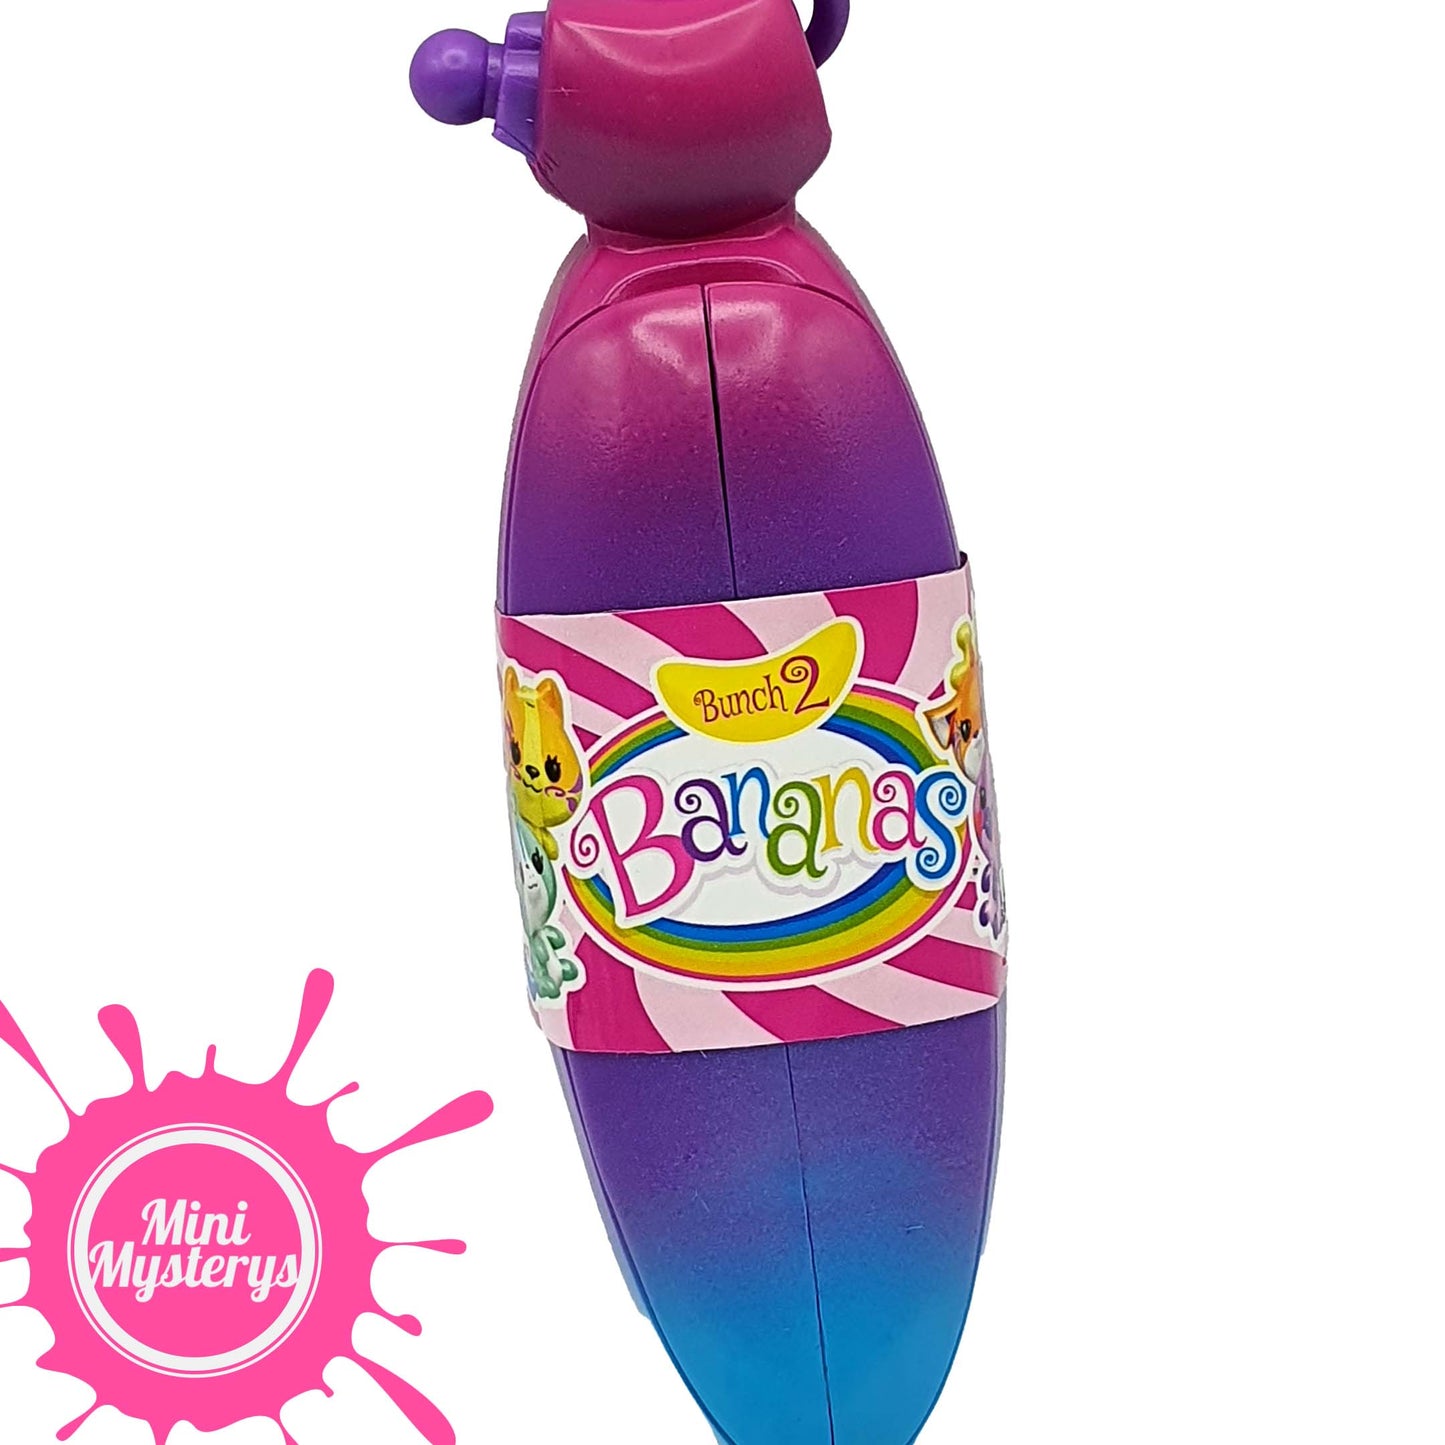 Girls Toy Bundle - 7 Toys inc Dreamworks Trolls, Bananas, Disney, Magiki Blind Bags (Girls Gift Ideas)